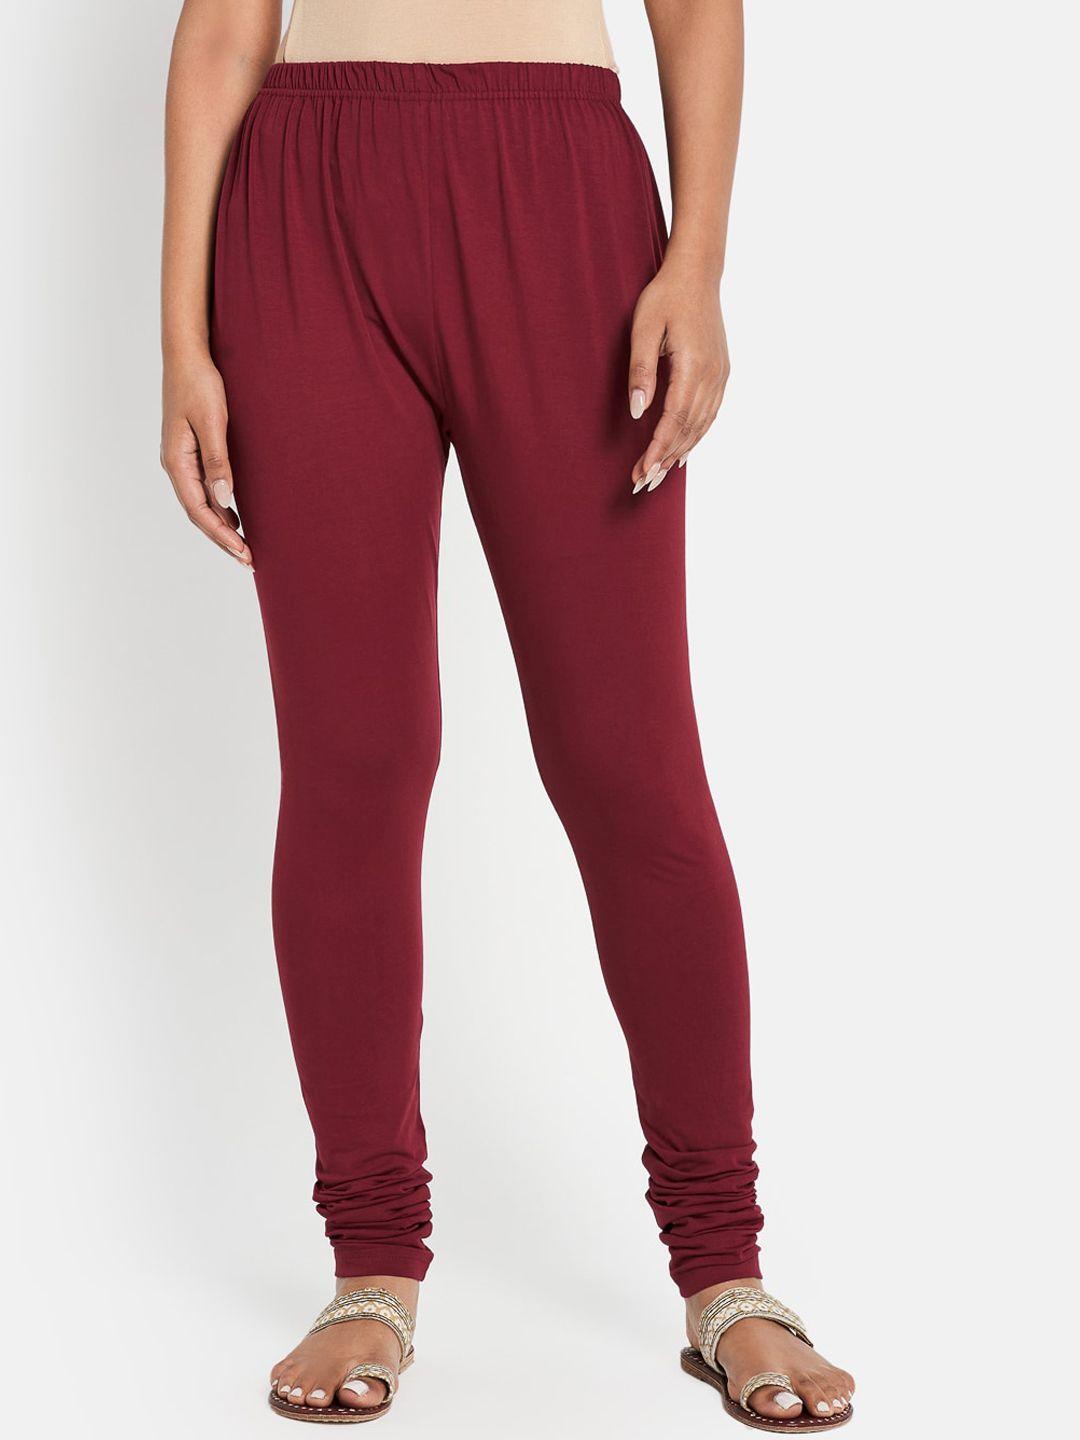 fabindia-maroon-regular-fit-solid-cotton-leggings